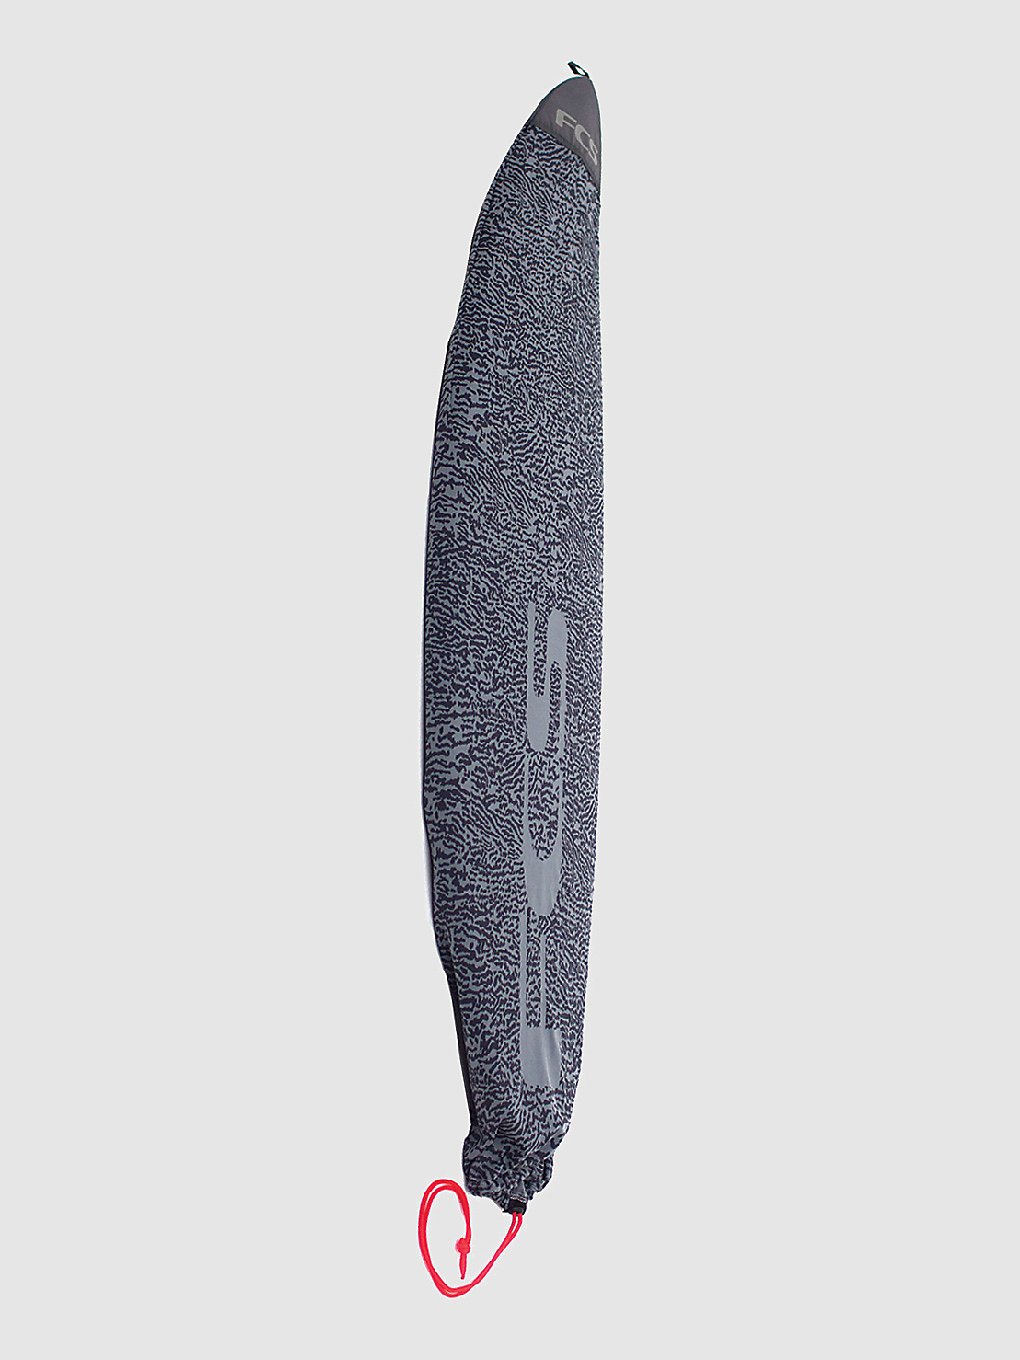 Image of FCS Stretch All Purpose 6'0 Sacca da Surf grigio